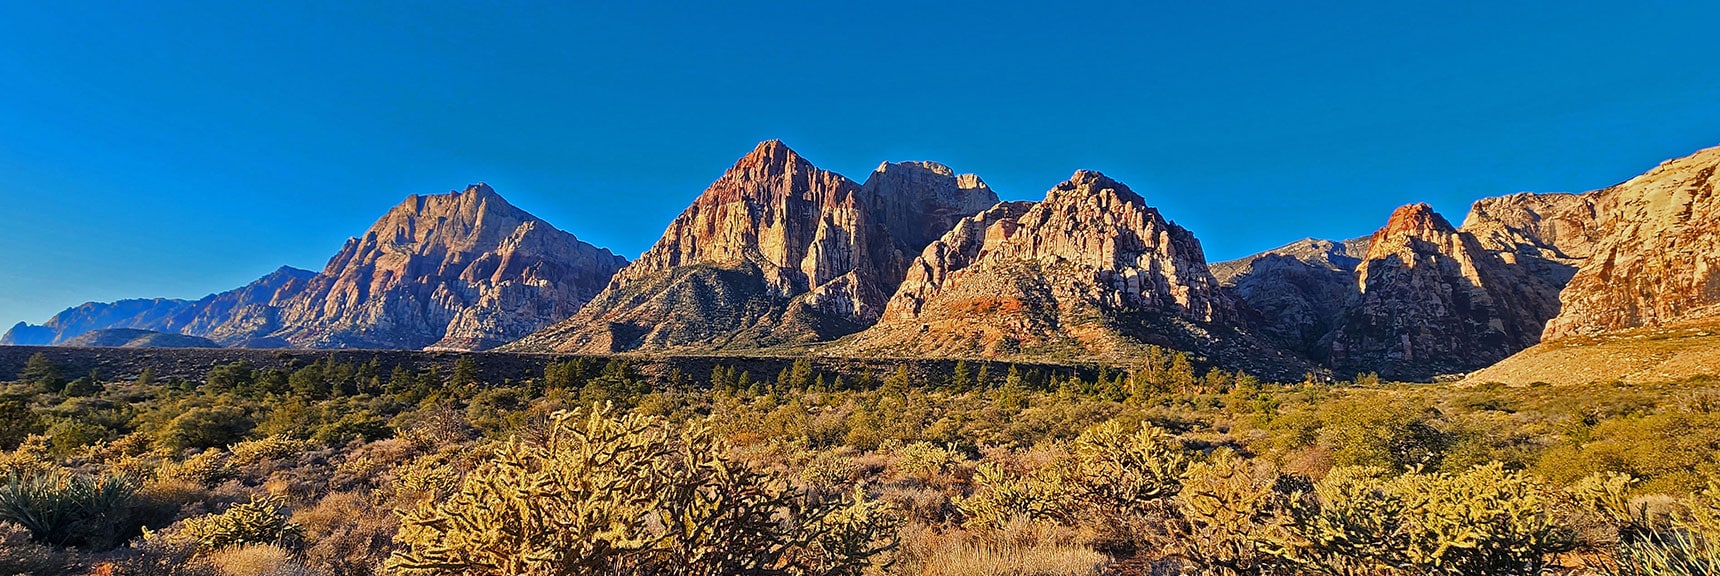 Left to Right: Mt. Wilson, Rainbow Mountain, Juniper Peak, Mescalito Pyramid, Bridge Mountain | Rock Climber Observations | Pine Creek Canyon | Rainbow Mountain Wilderness, Nevada